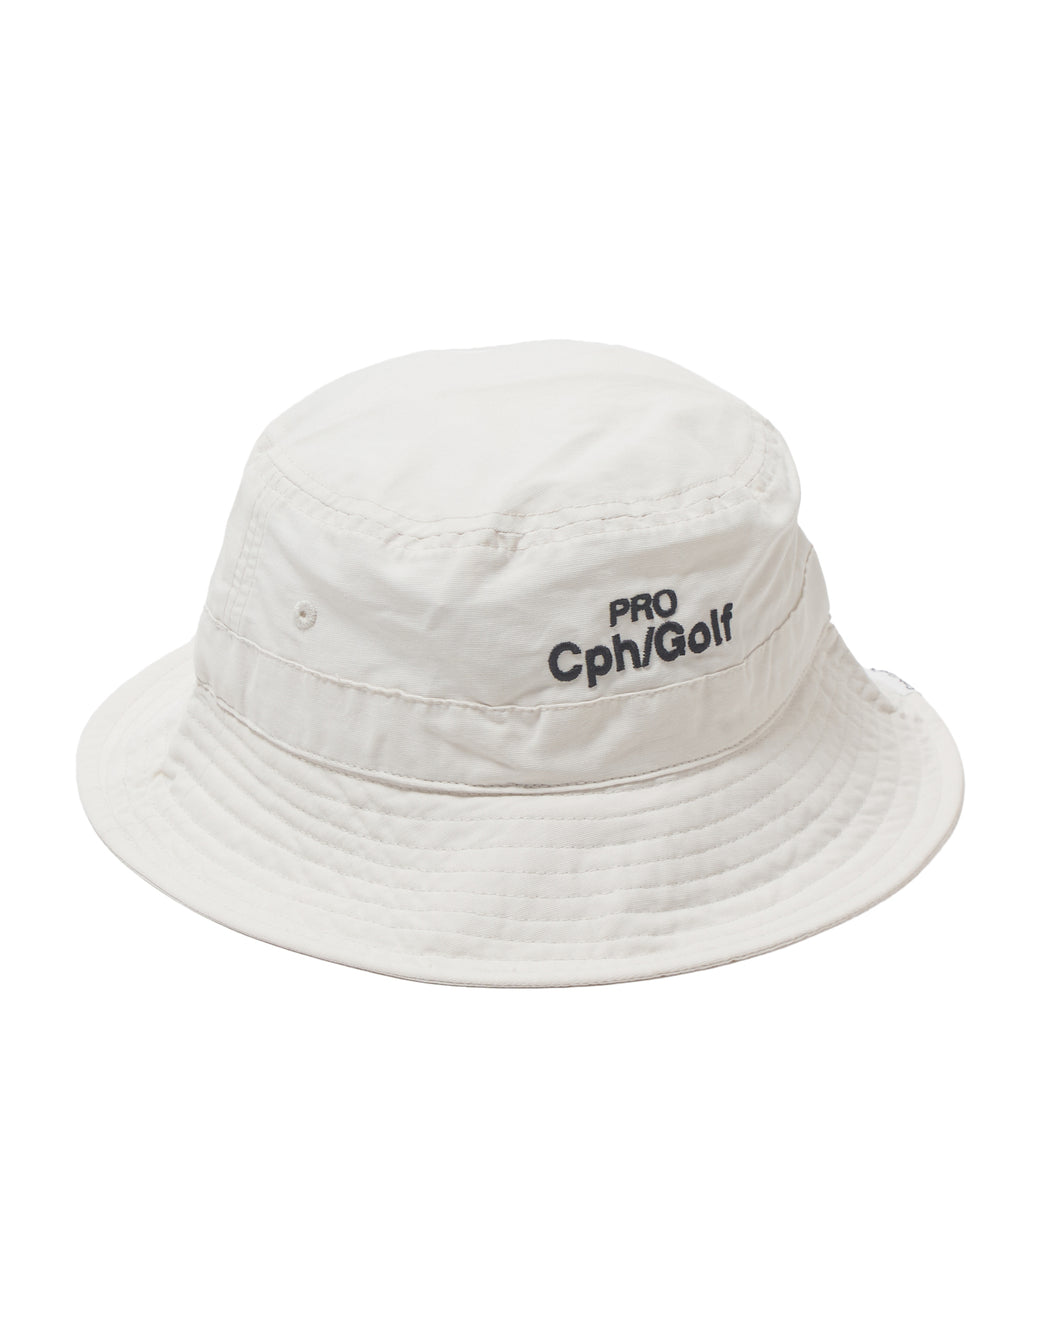 #Cph/Golf™ PRO BUCKET HAT - WHITE